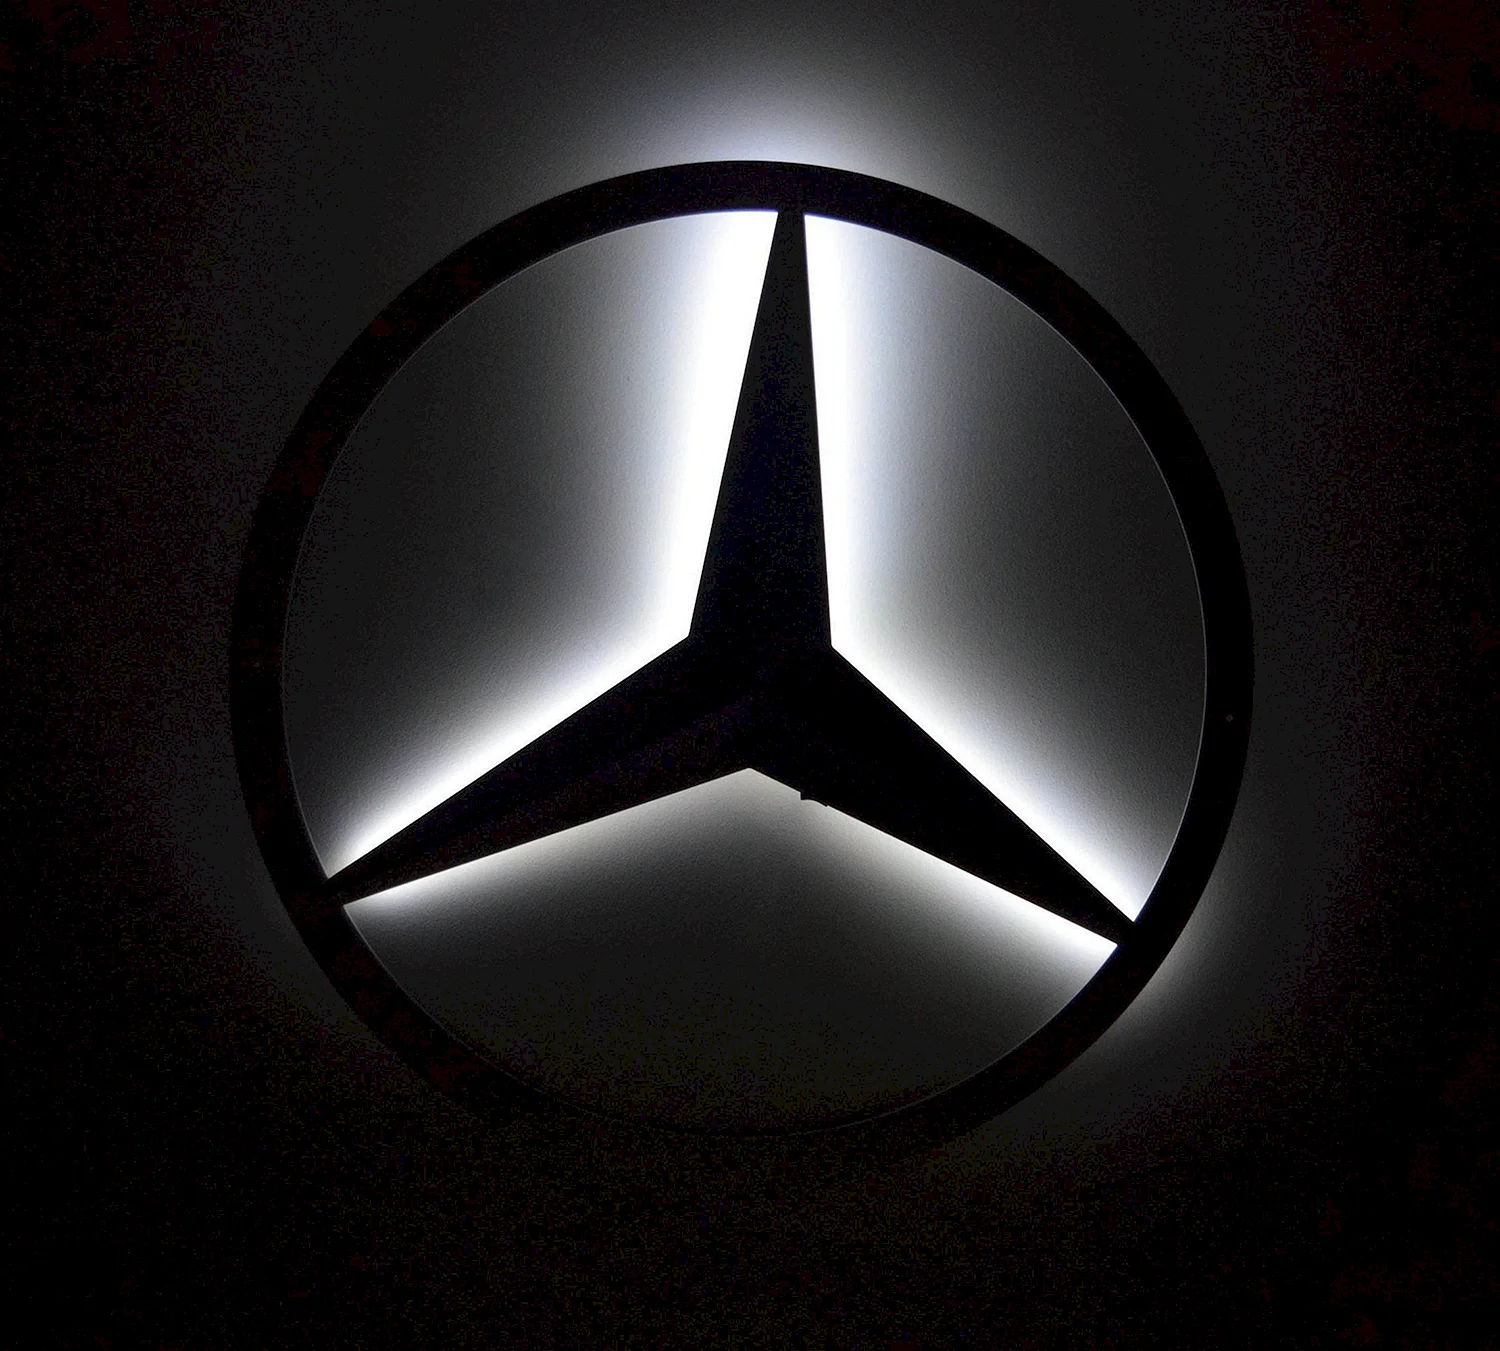 Mercedes Benz logo 2020